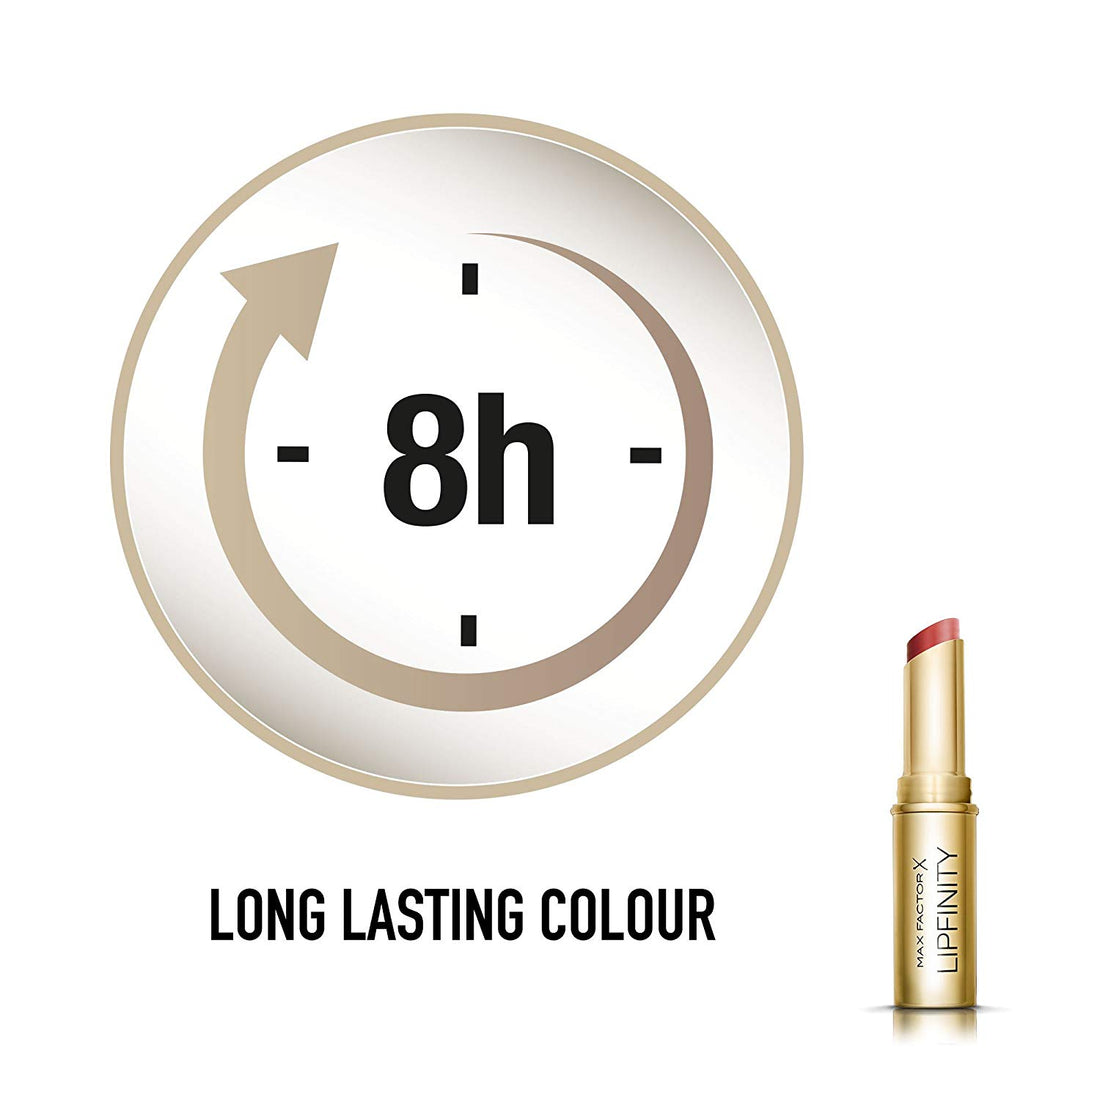 Max Factor Lip Finity Long Lasting Lipstick 53 Garnet